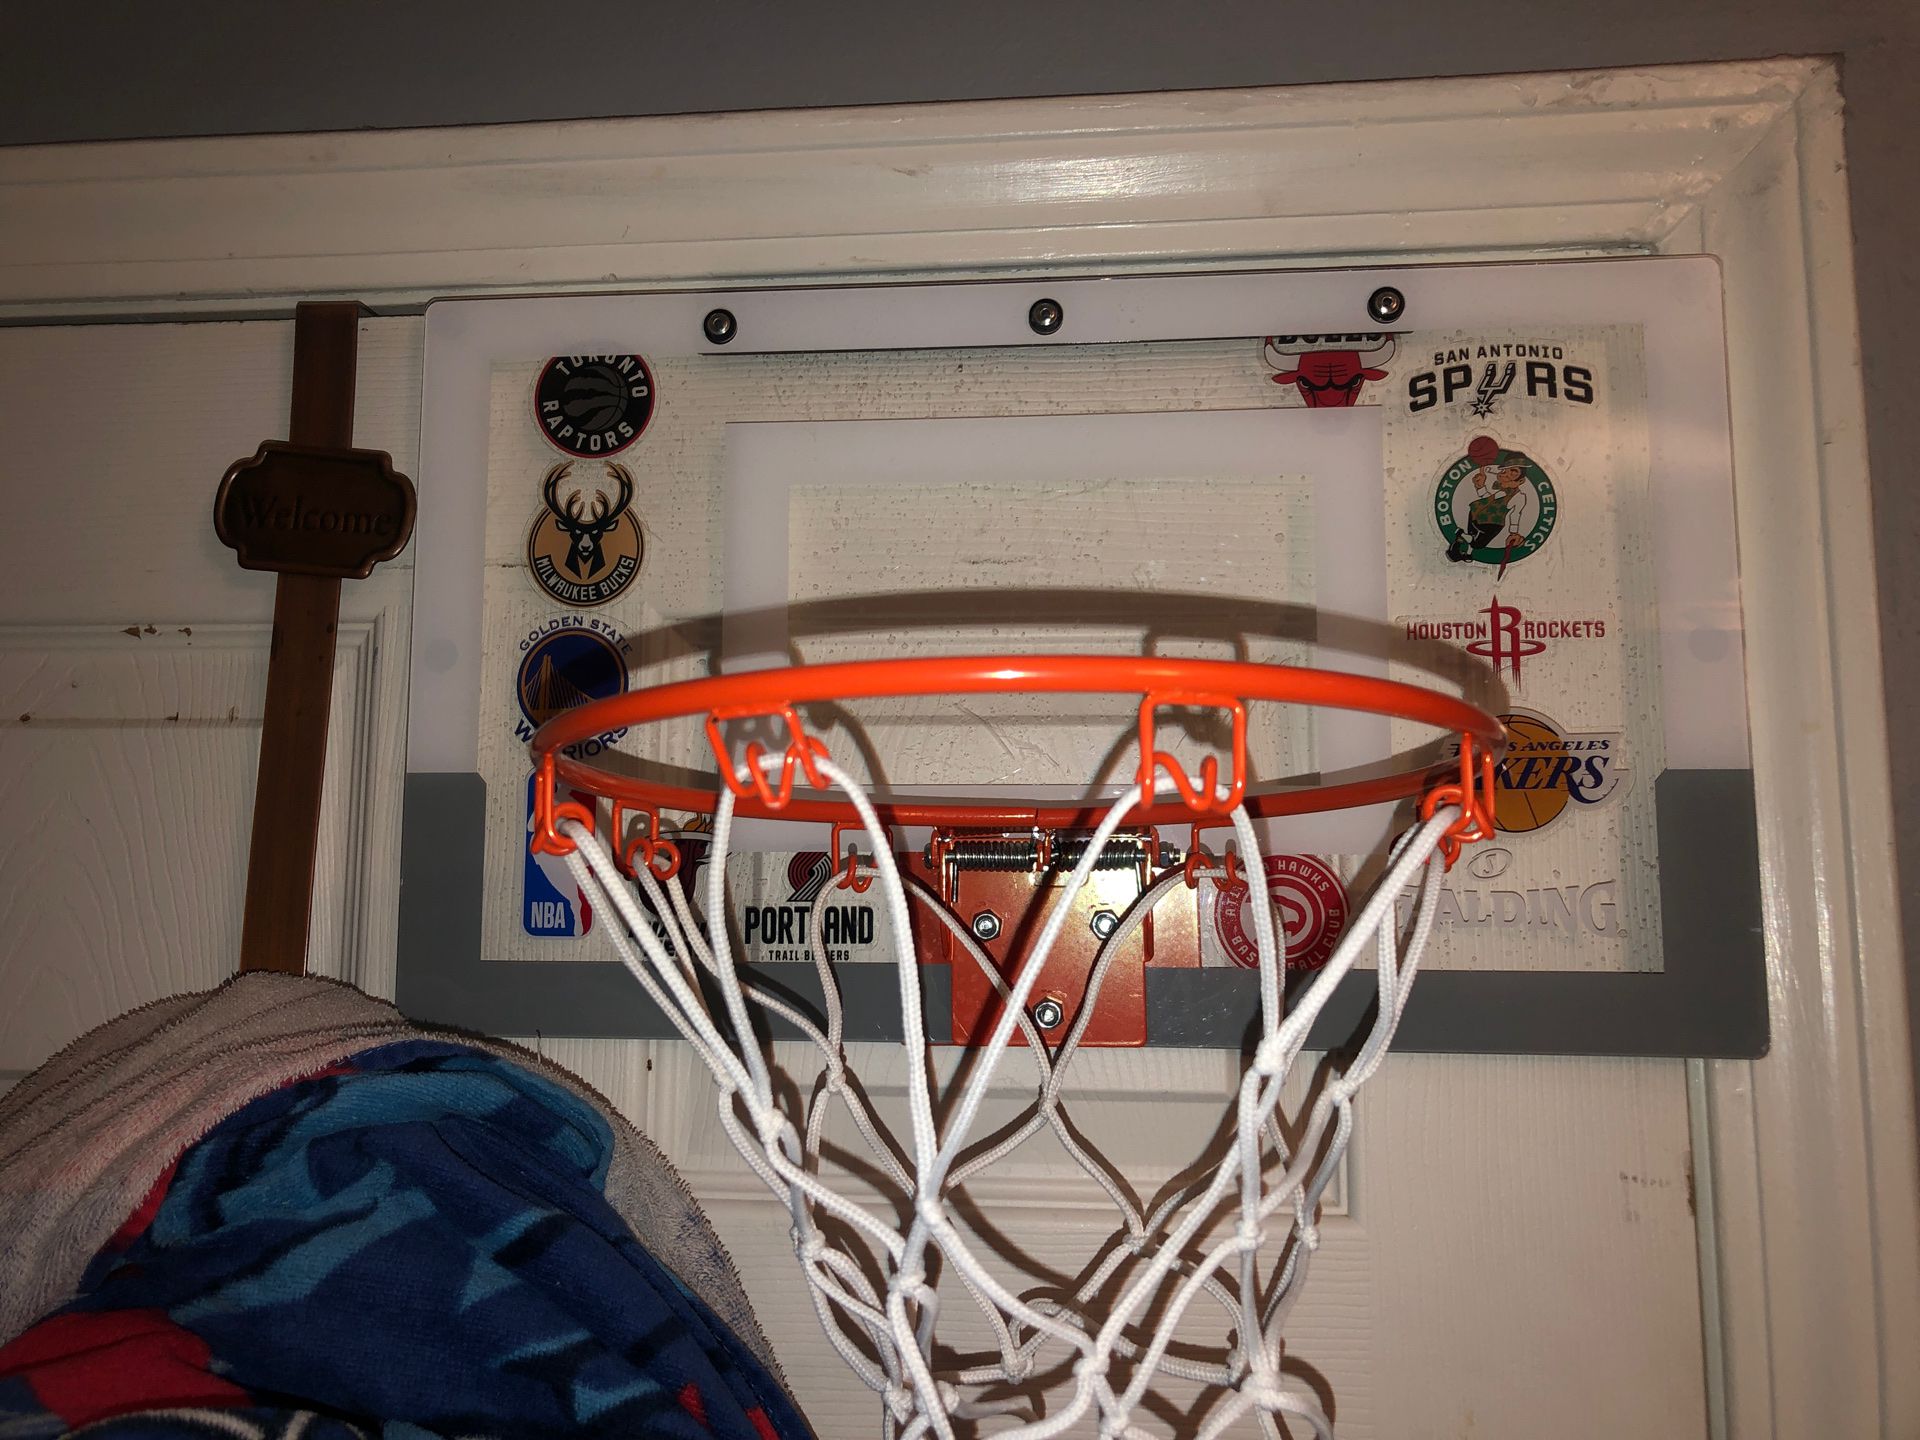 Small basketball hoop